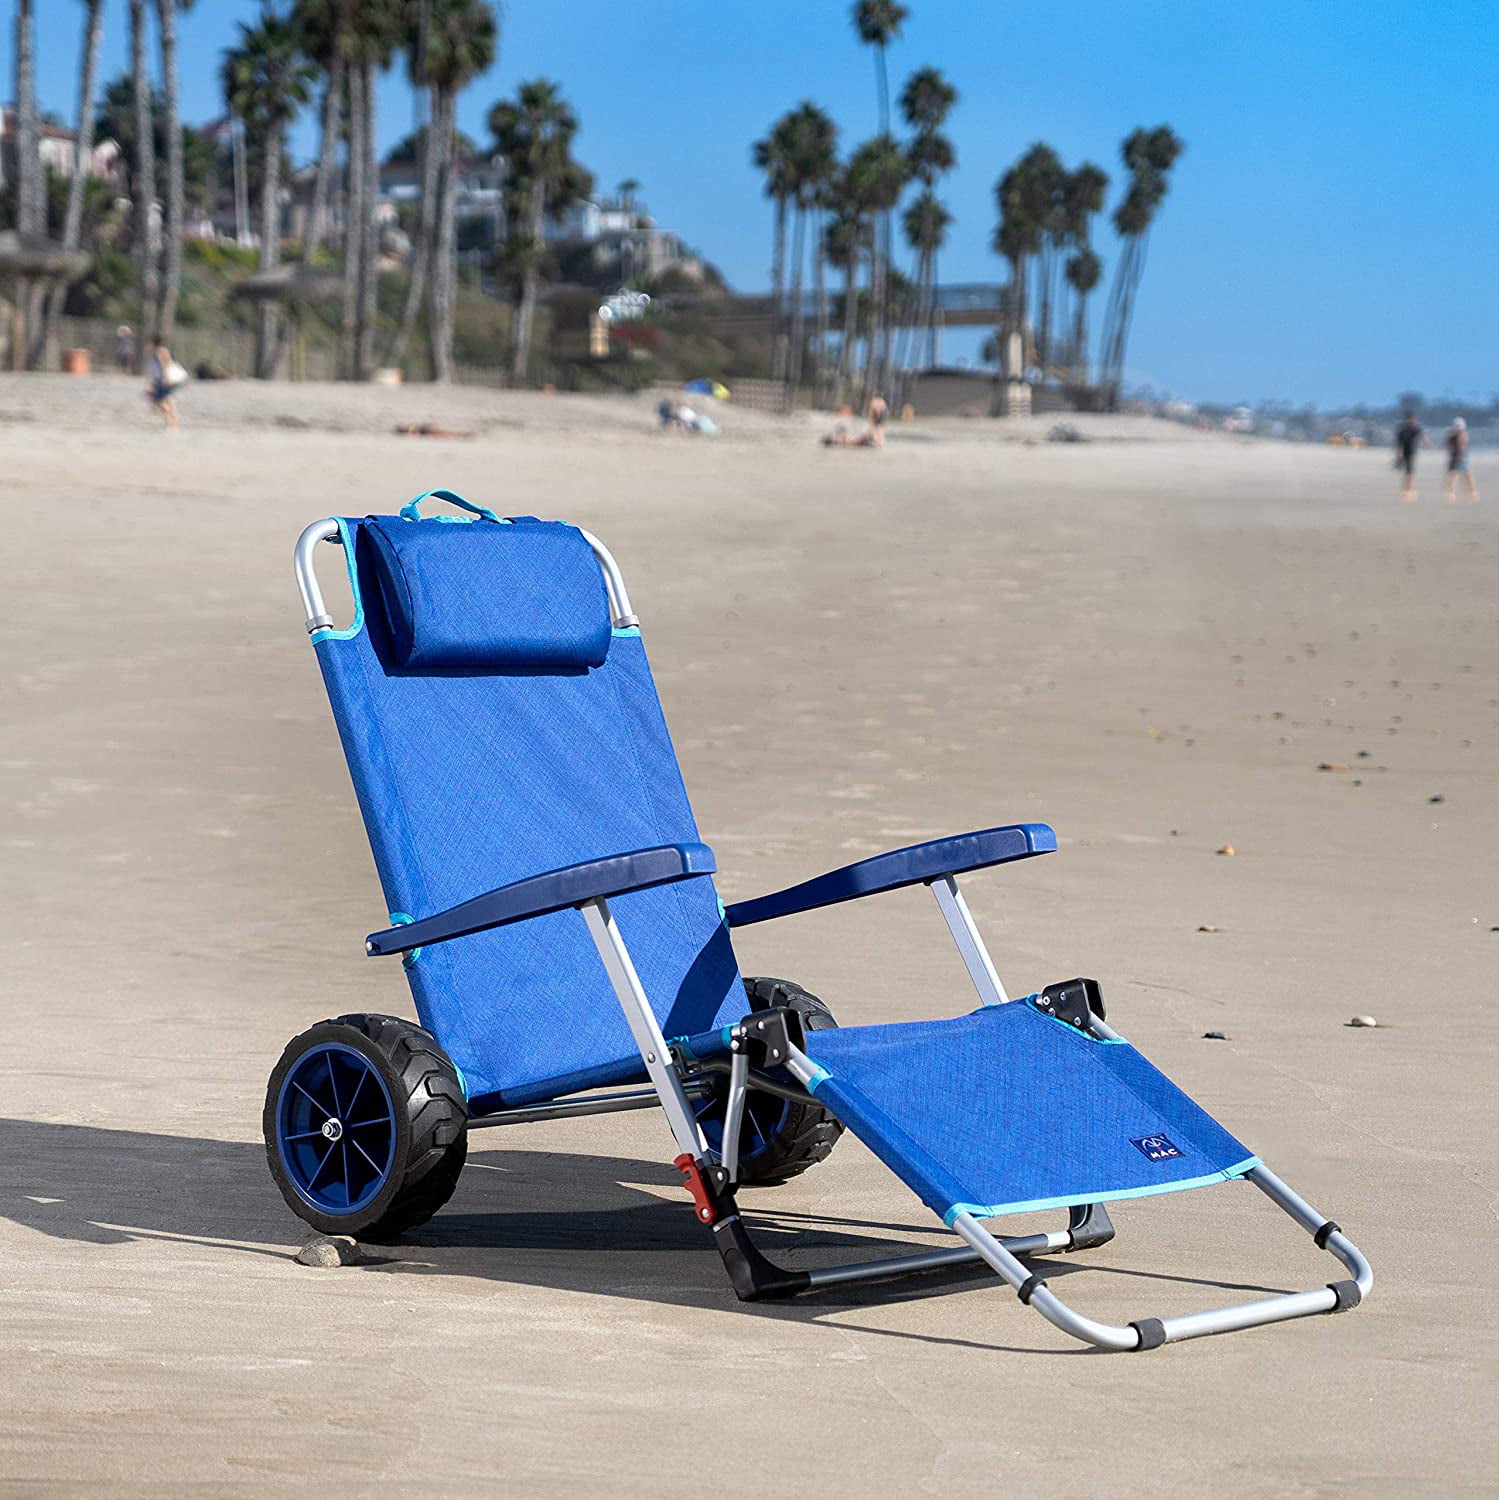 New Mac Sports Beach Chair Wagon for Small Space